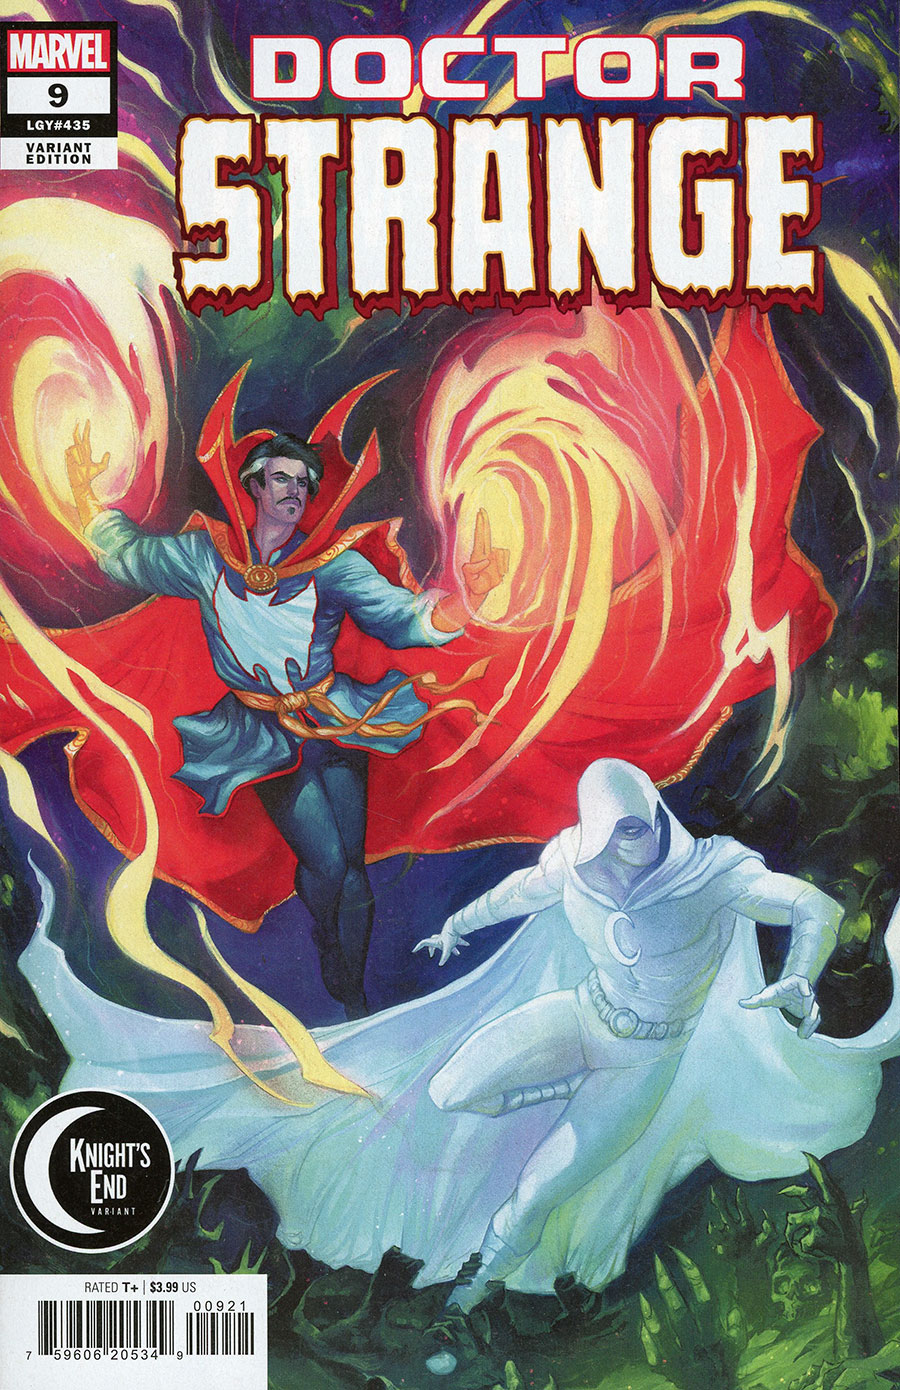 Doctor Strange Vol 6 #9 Cover B Variant Meghan Hetrick Knights End Cover